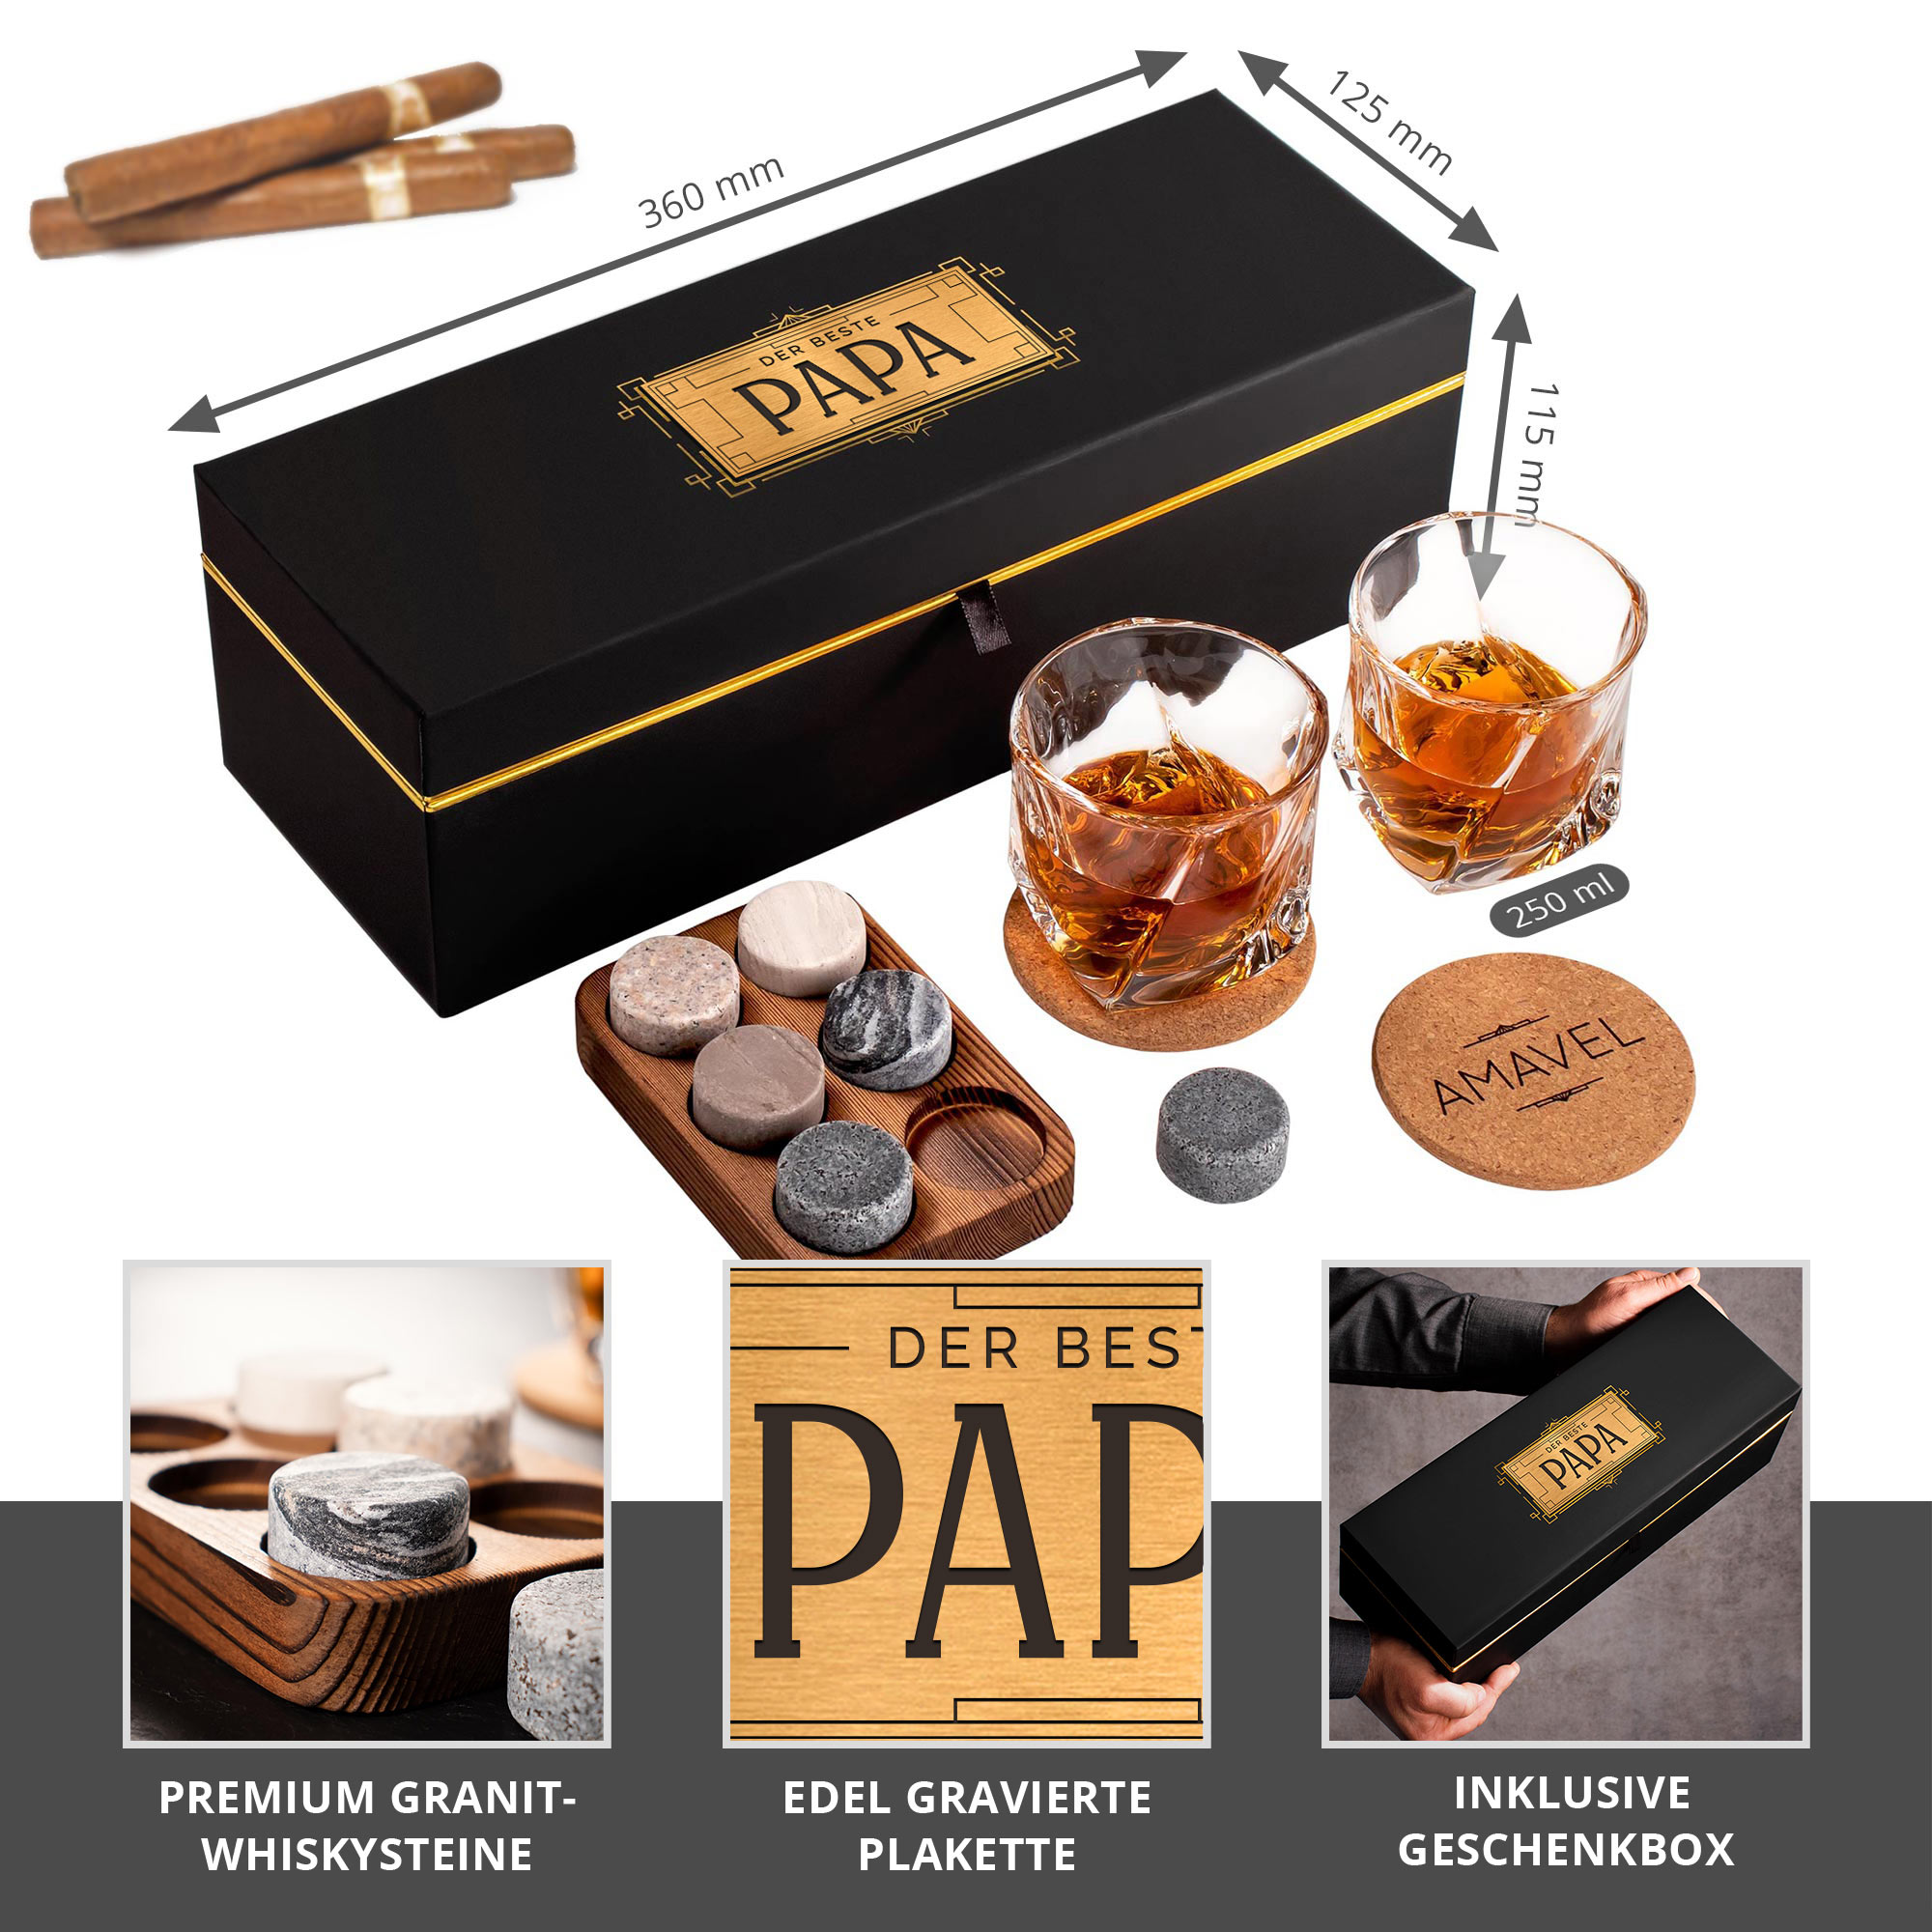 Whisky Set in edler Geschenkbox - Bester Papa 0021-0002-DE-0002 - 1